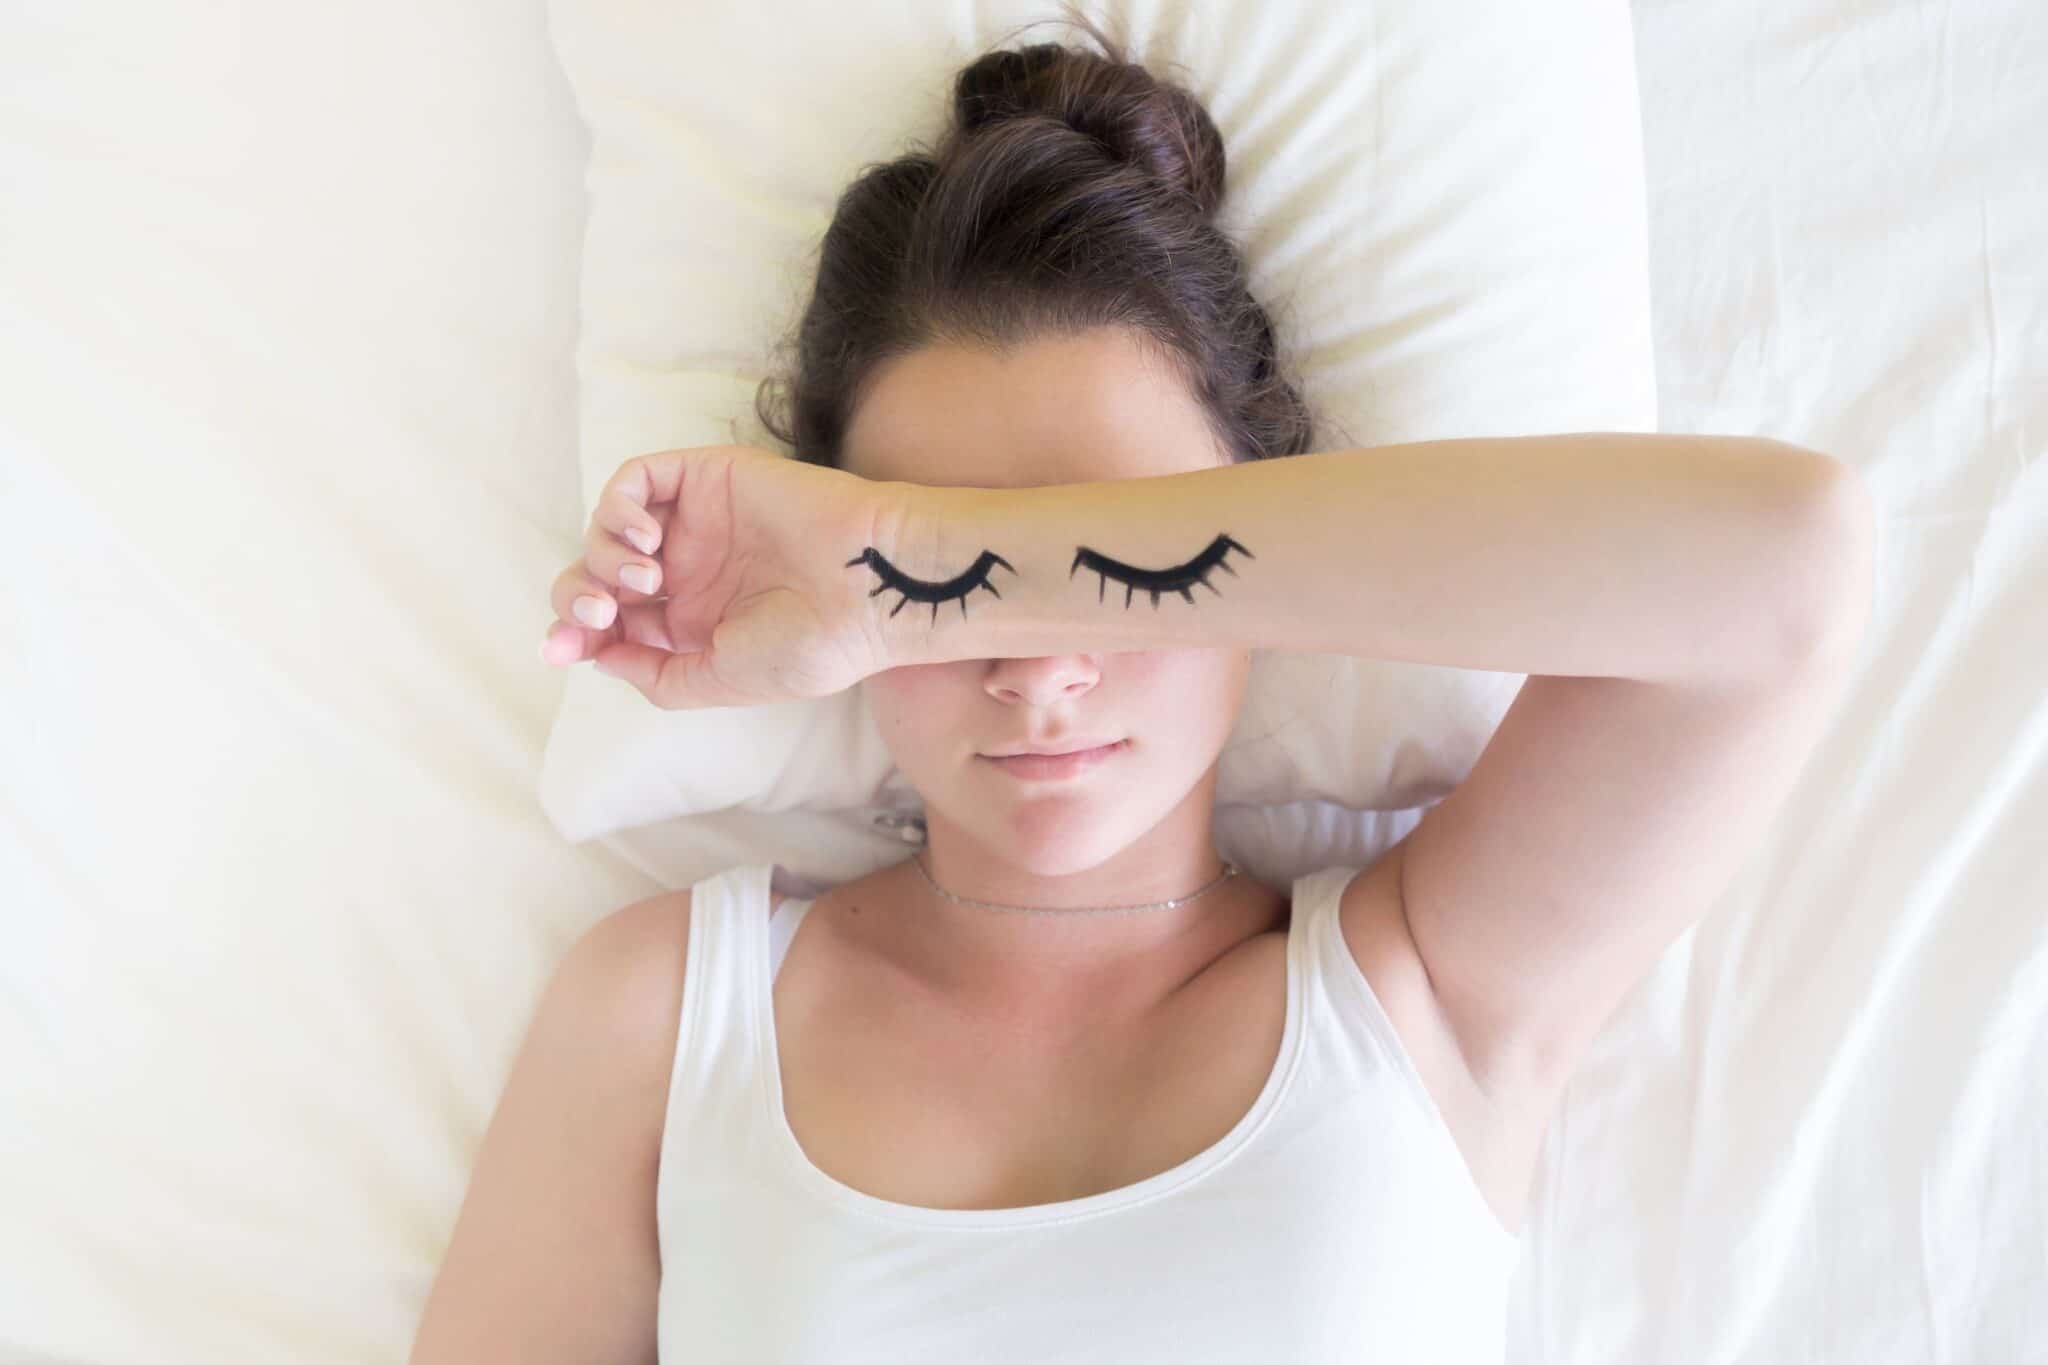 Woman sleeps with eyes drawn on arm